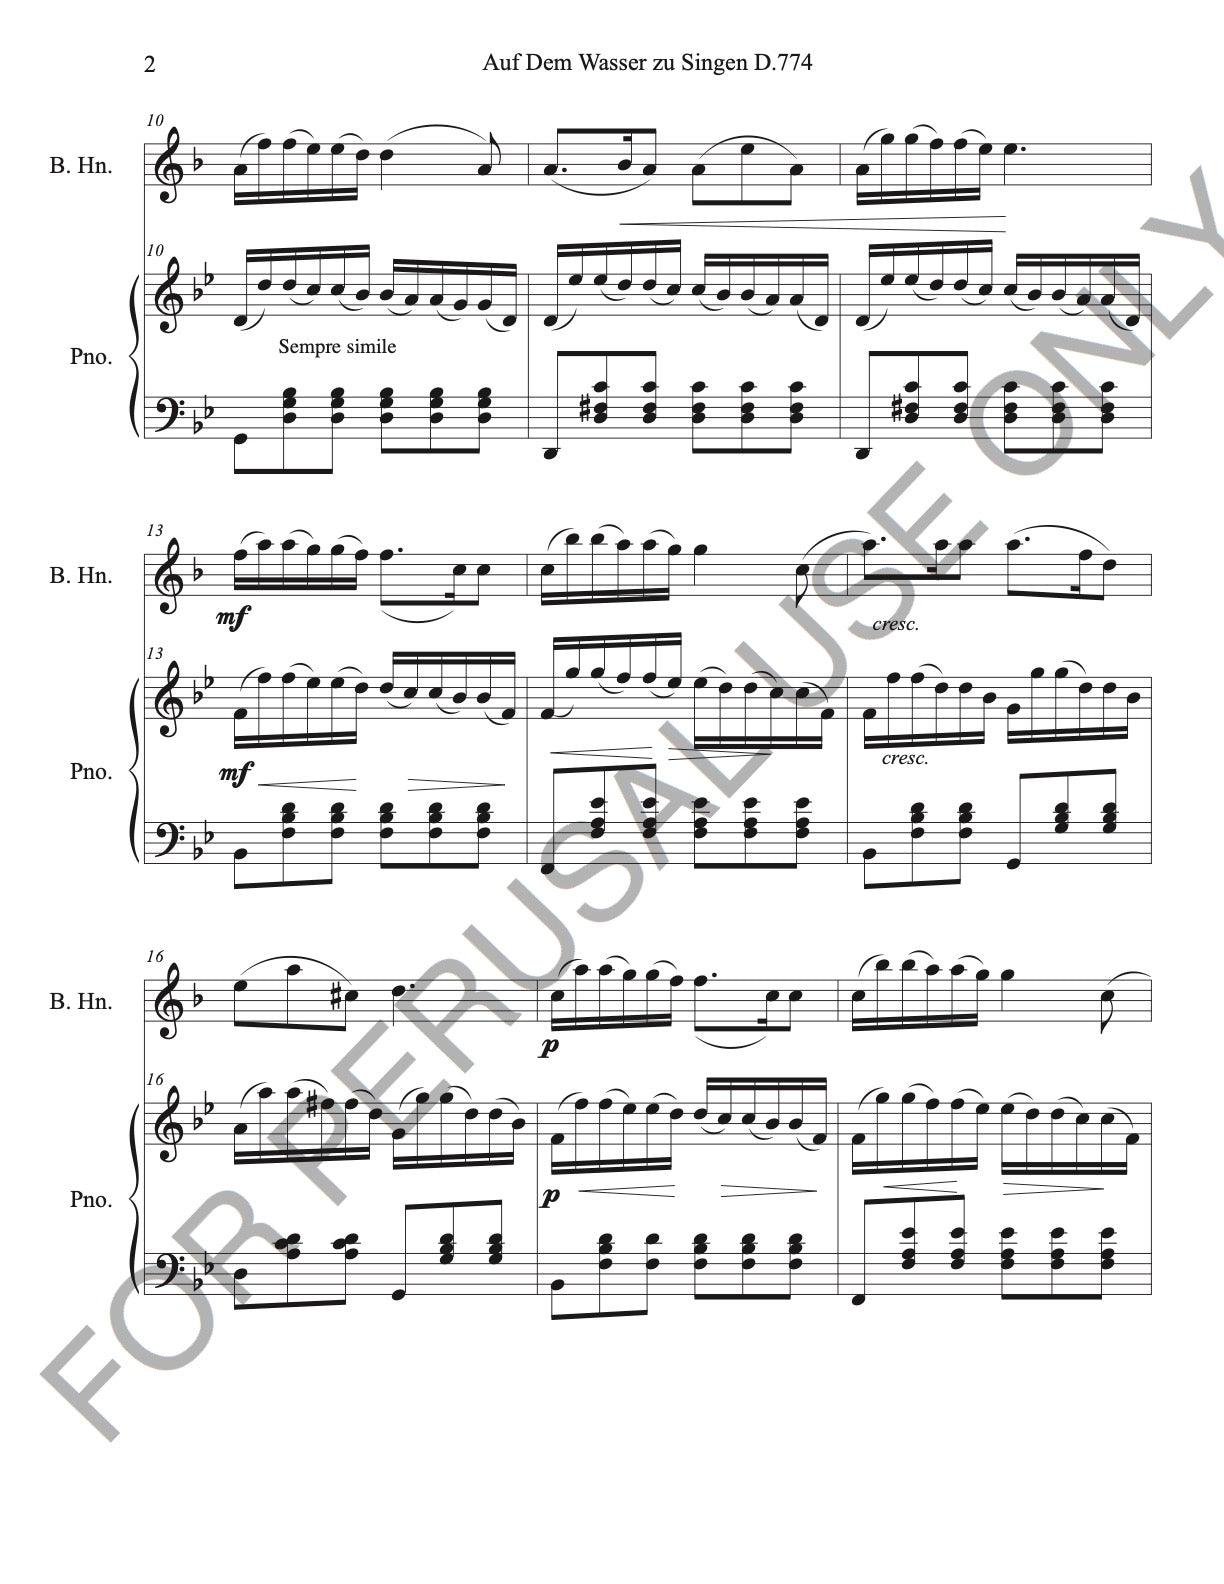 Basset Horn and Piano sheet music: Schubert's Auf dem Wasser zu singen - ChaipruckMekara